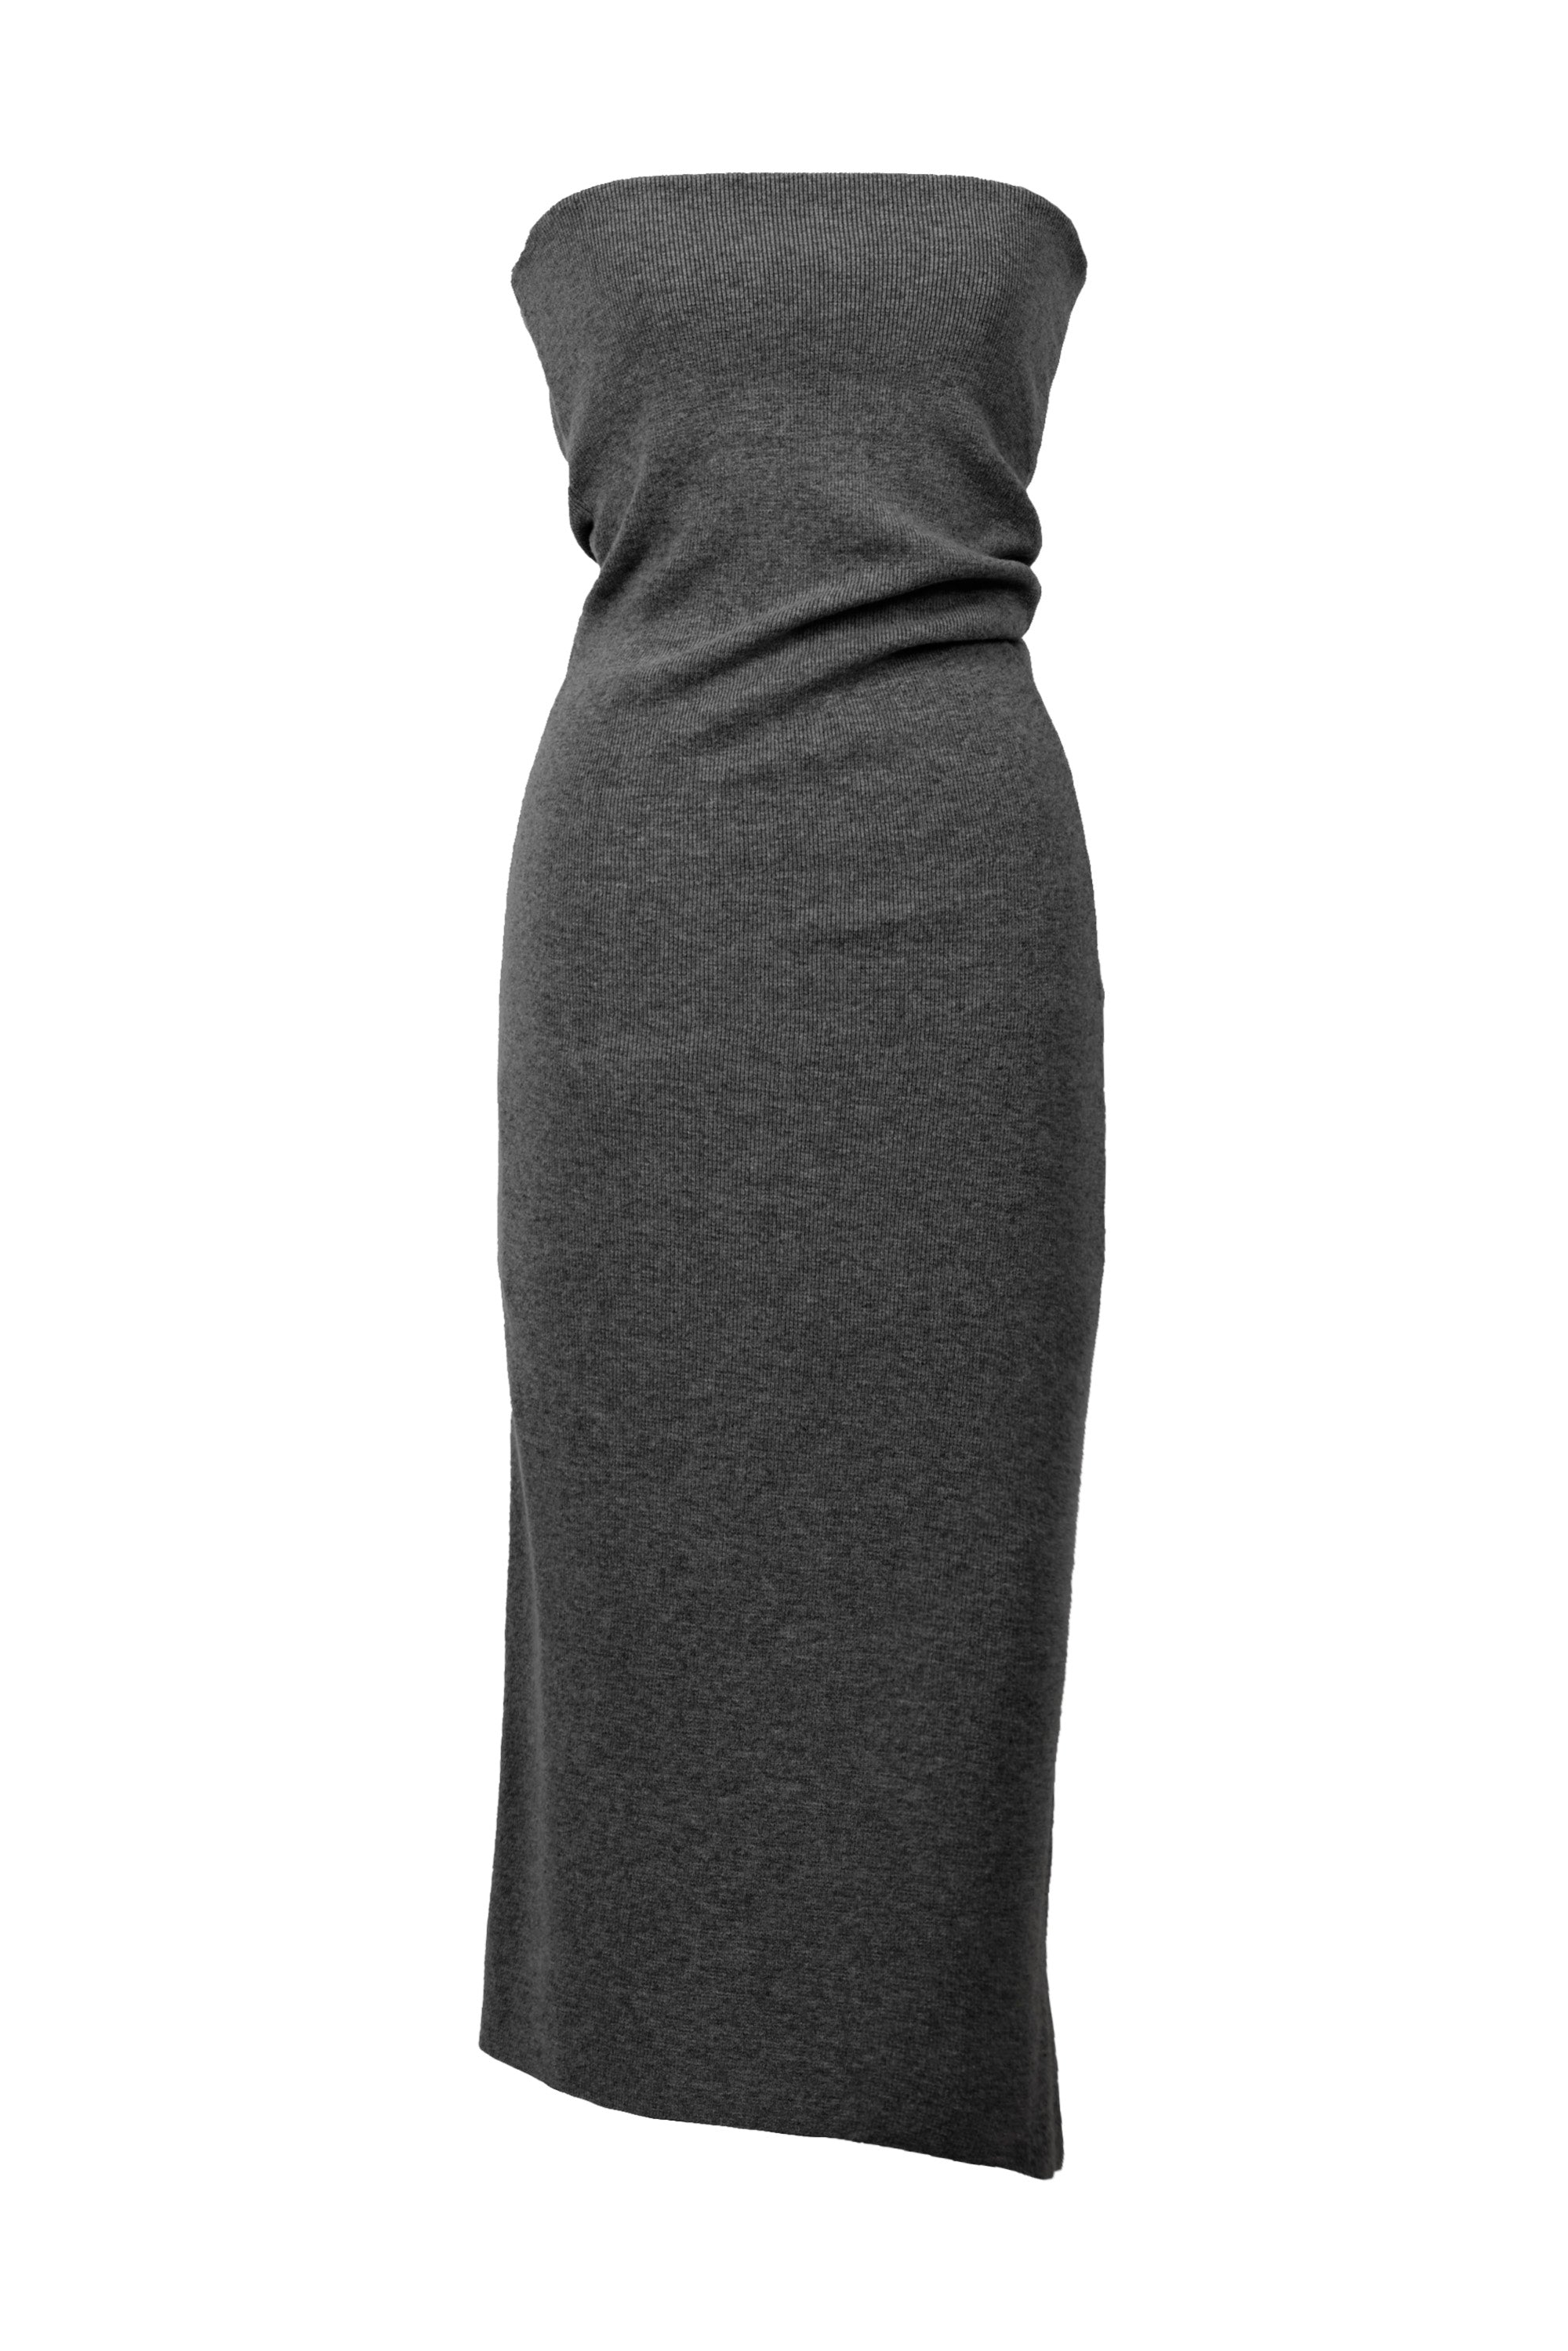 Wool Cashmere Knit 2 way Dress | Charcoal Grey – MYLAN ONLINE SHOP